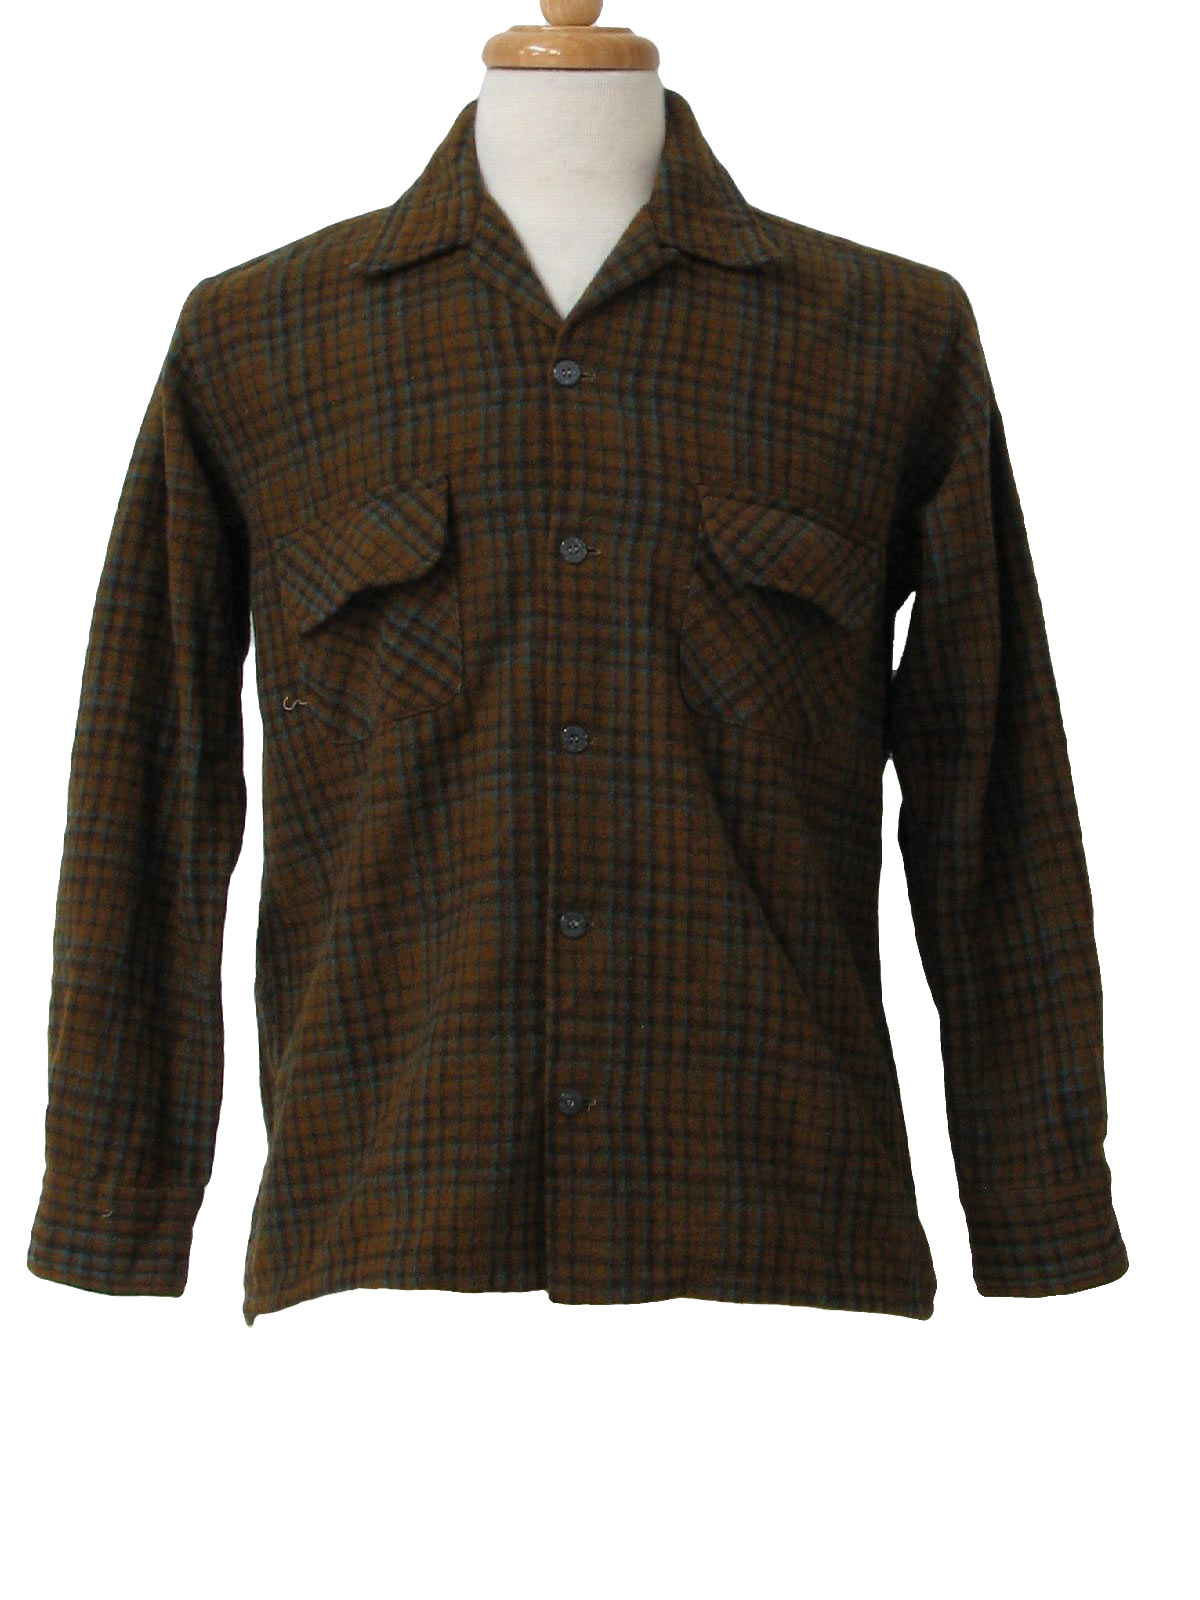 Retro 1950's Wool Shirt (Towncraft) : 50s -Towncraft- Mens medium